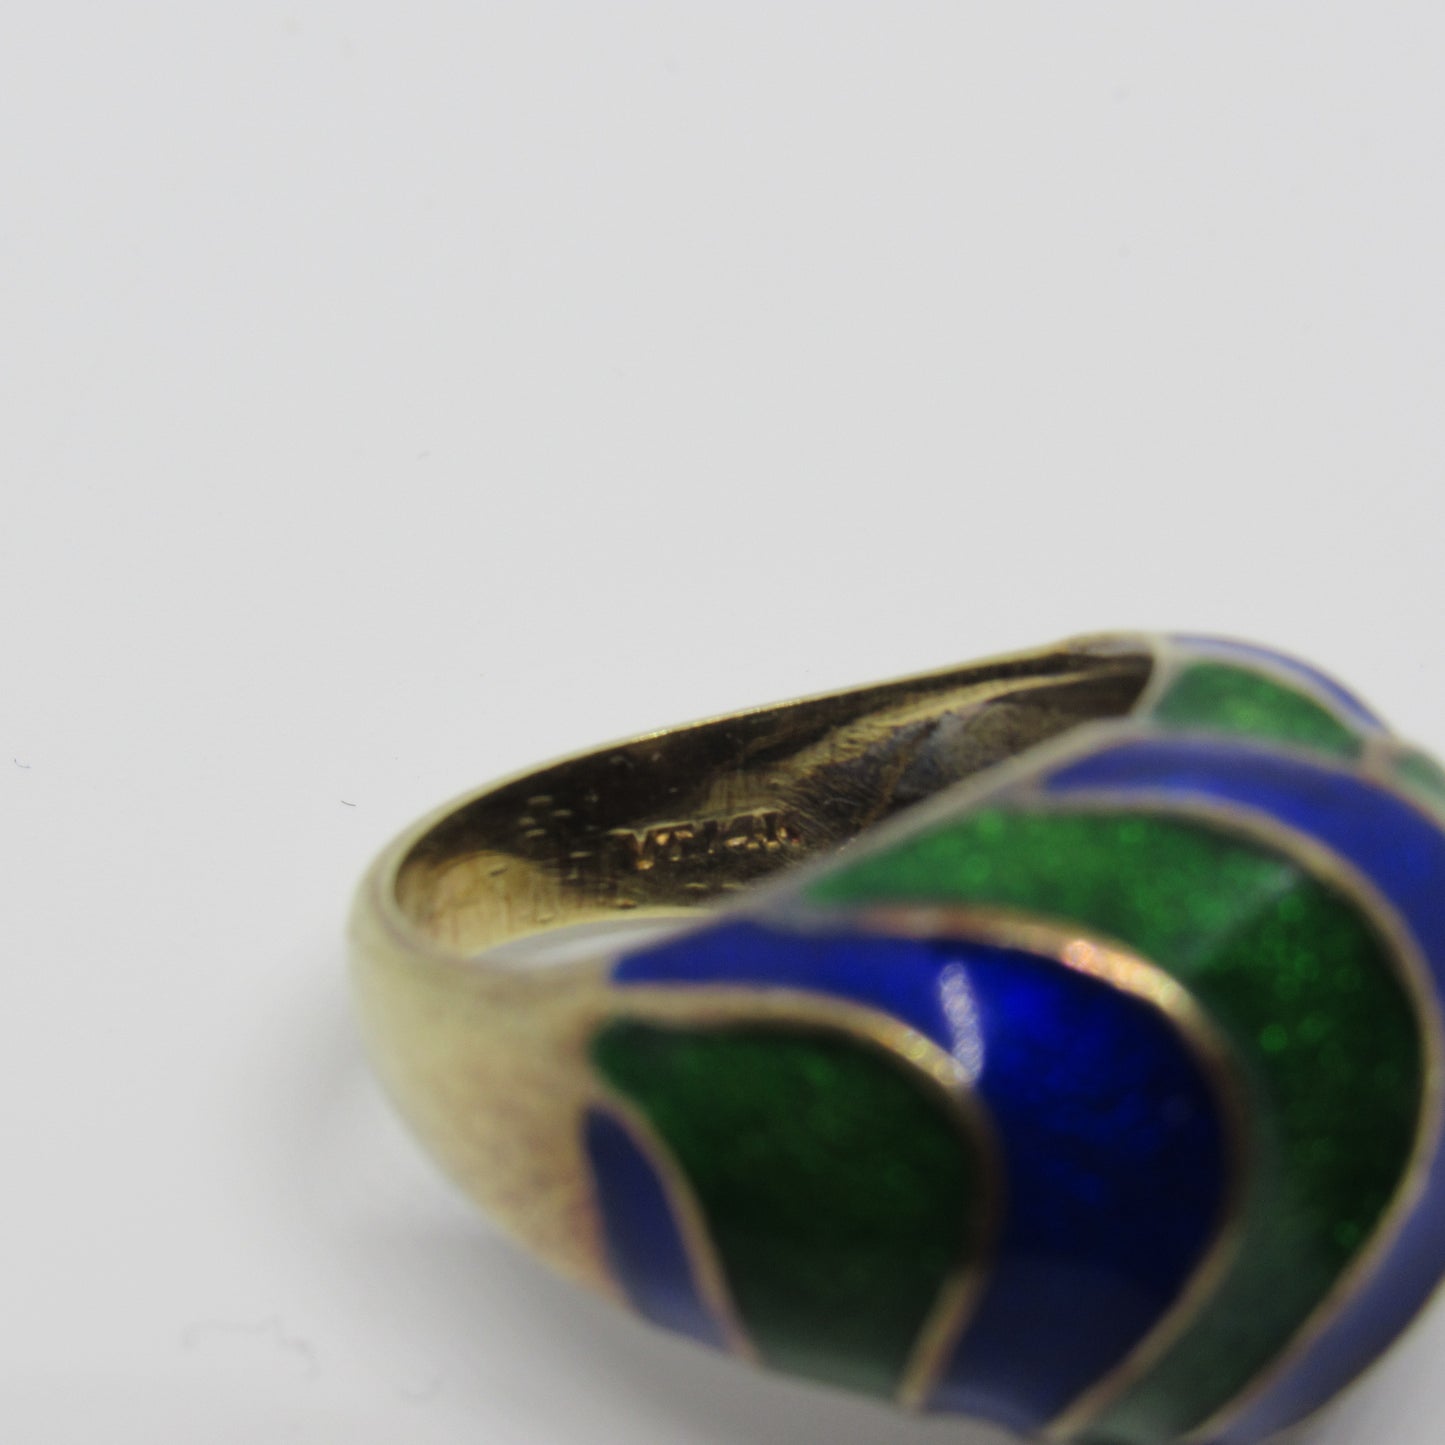 Vintage 14k Yellow Gold Blue & Green Striped Domed Enamel Ring - Sz 6.75